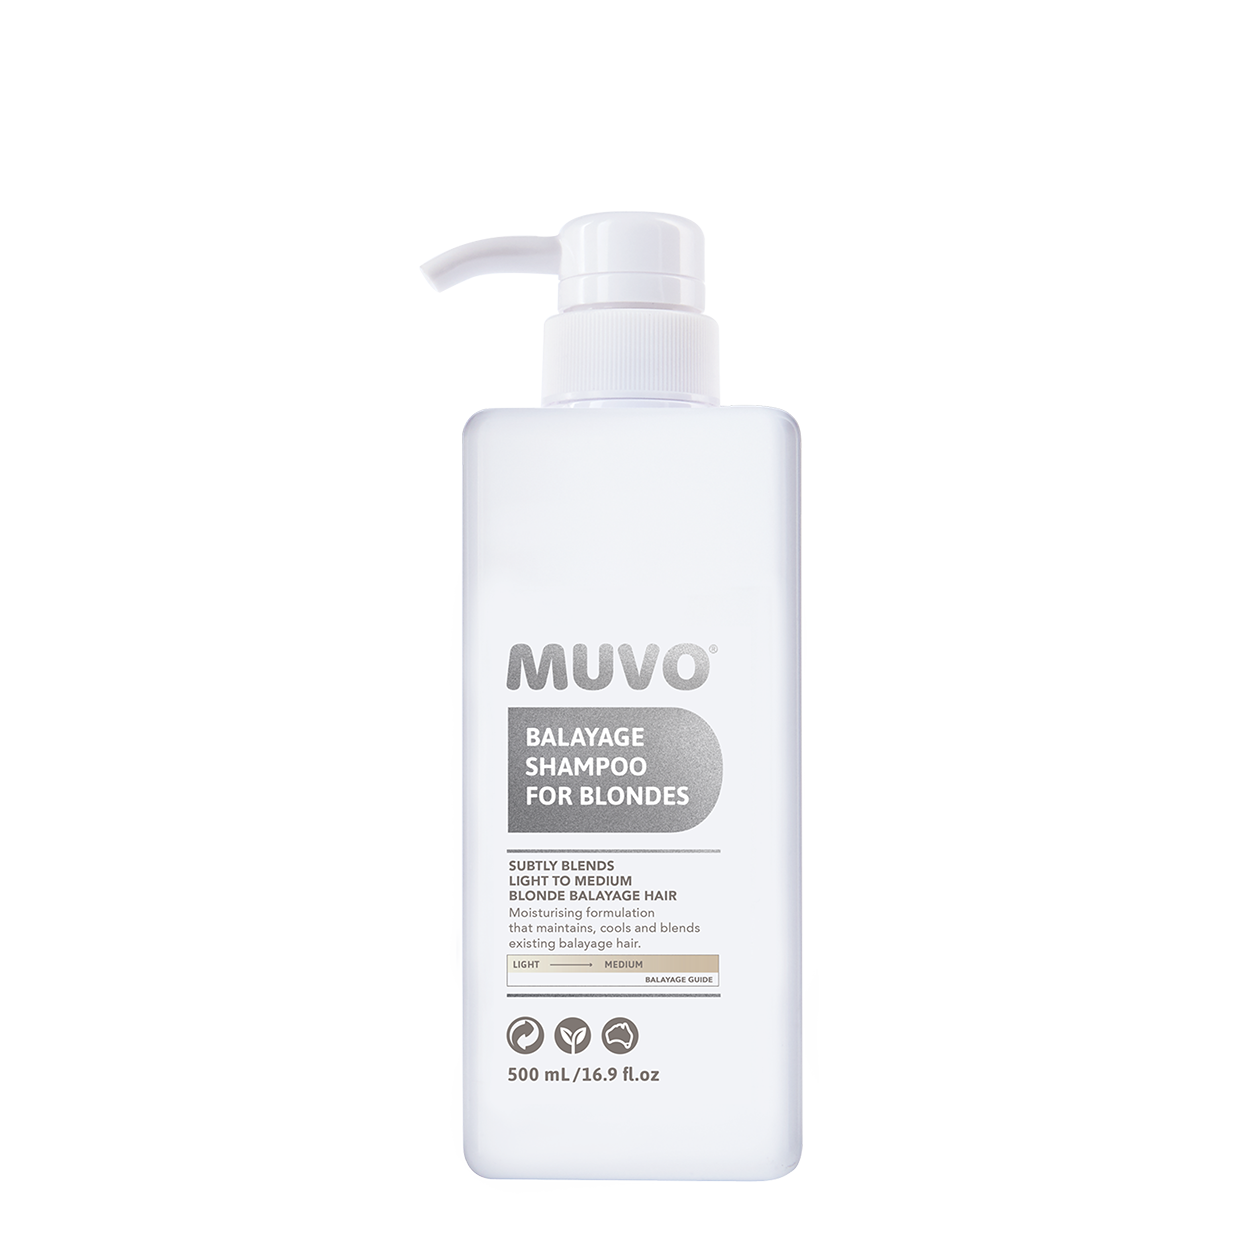 MUVO Balayage Shampoo For Blondes 500ml